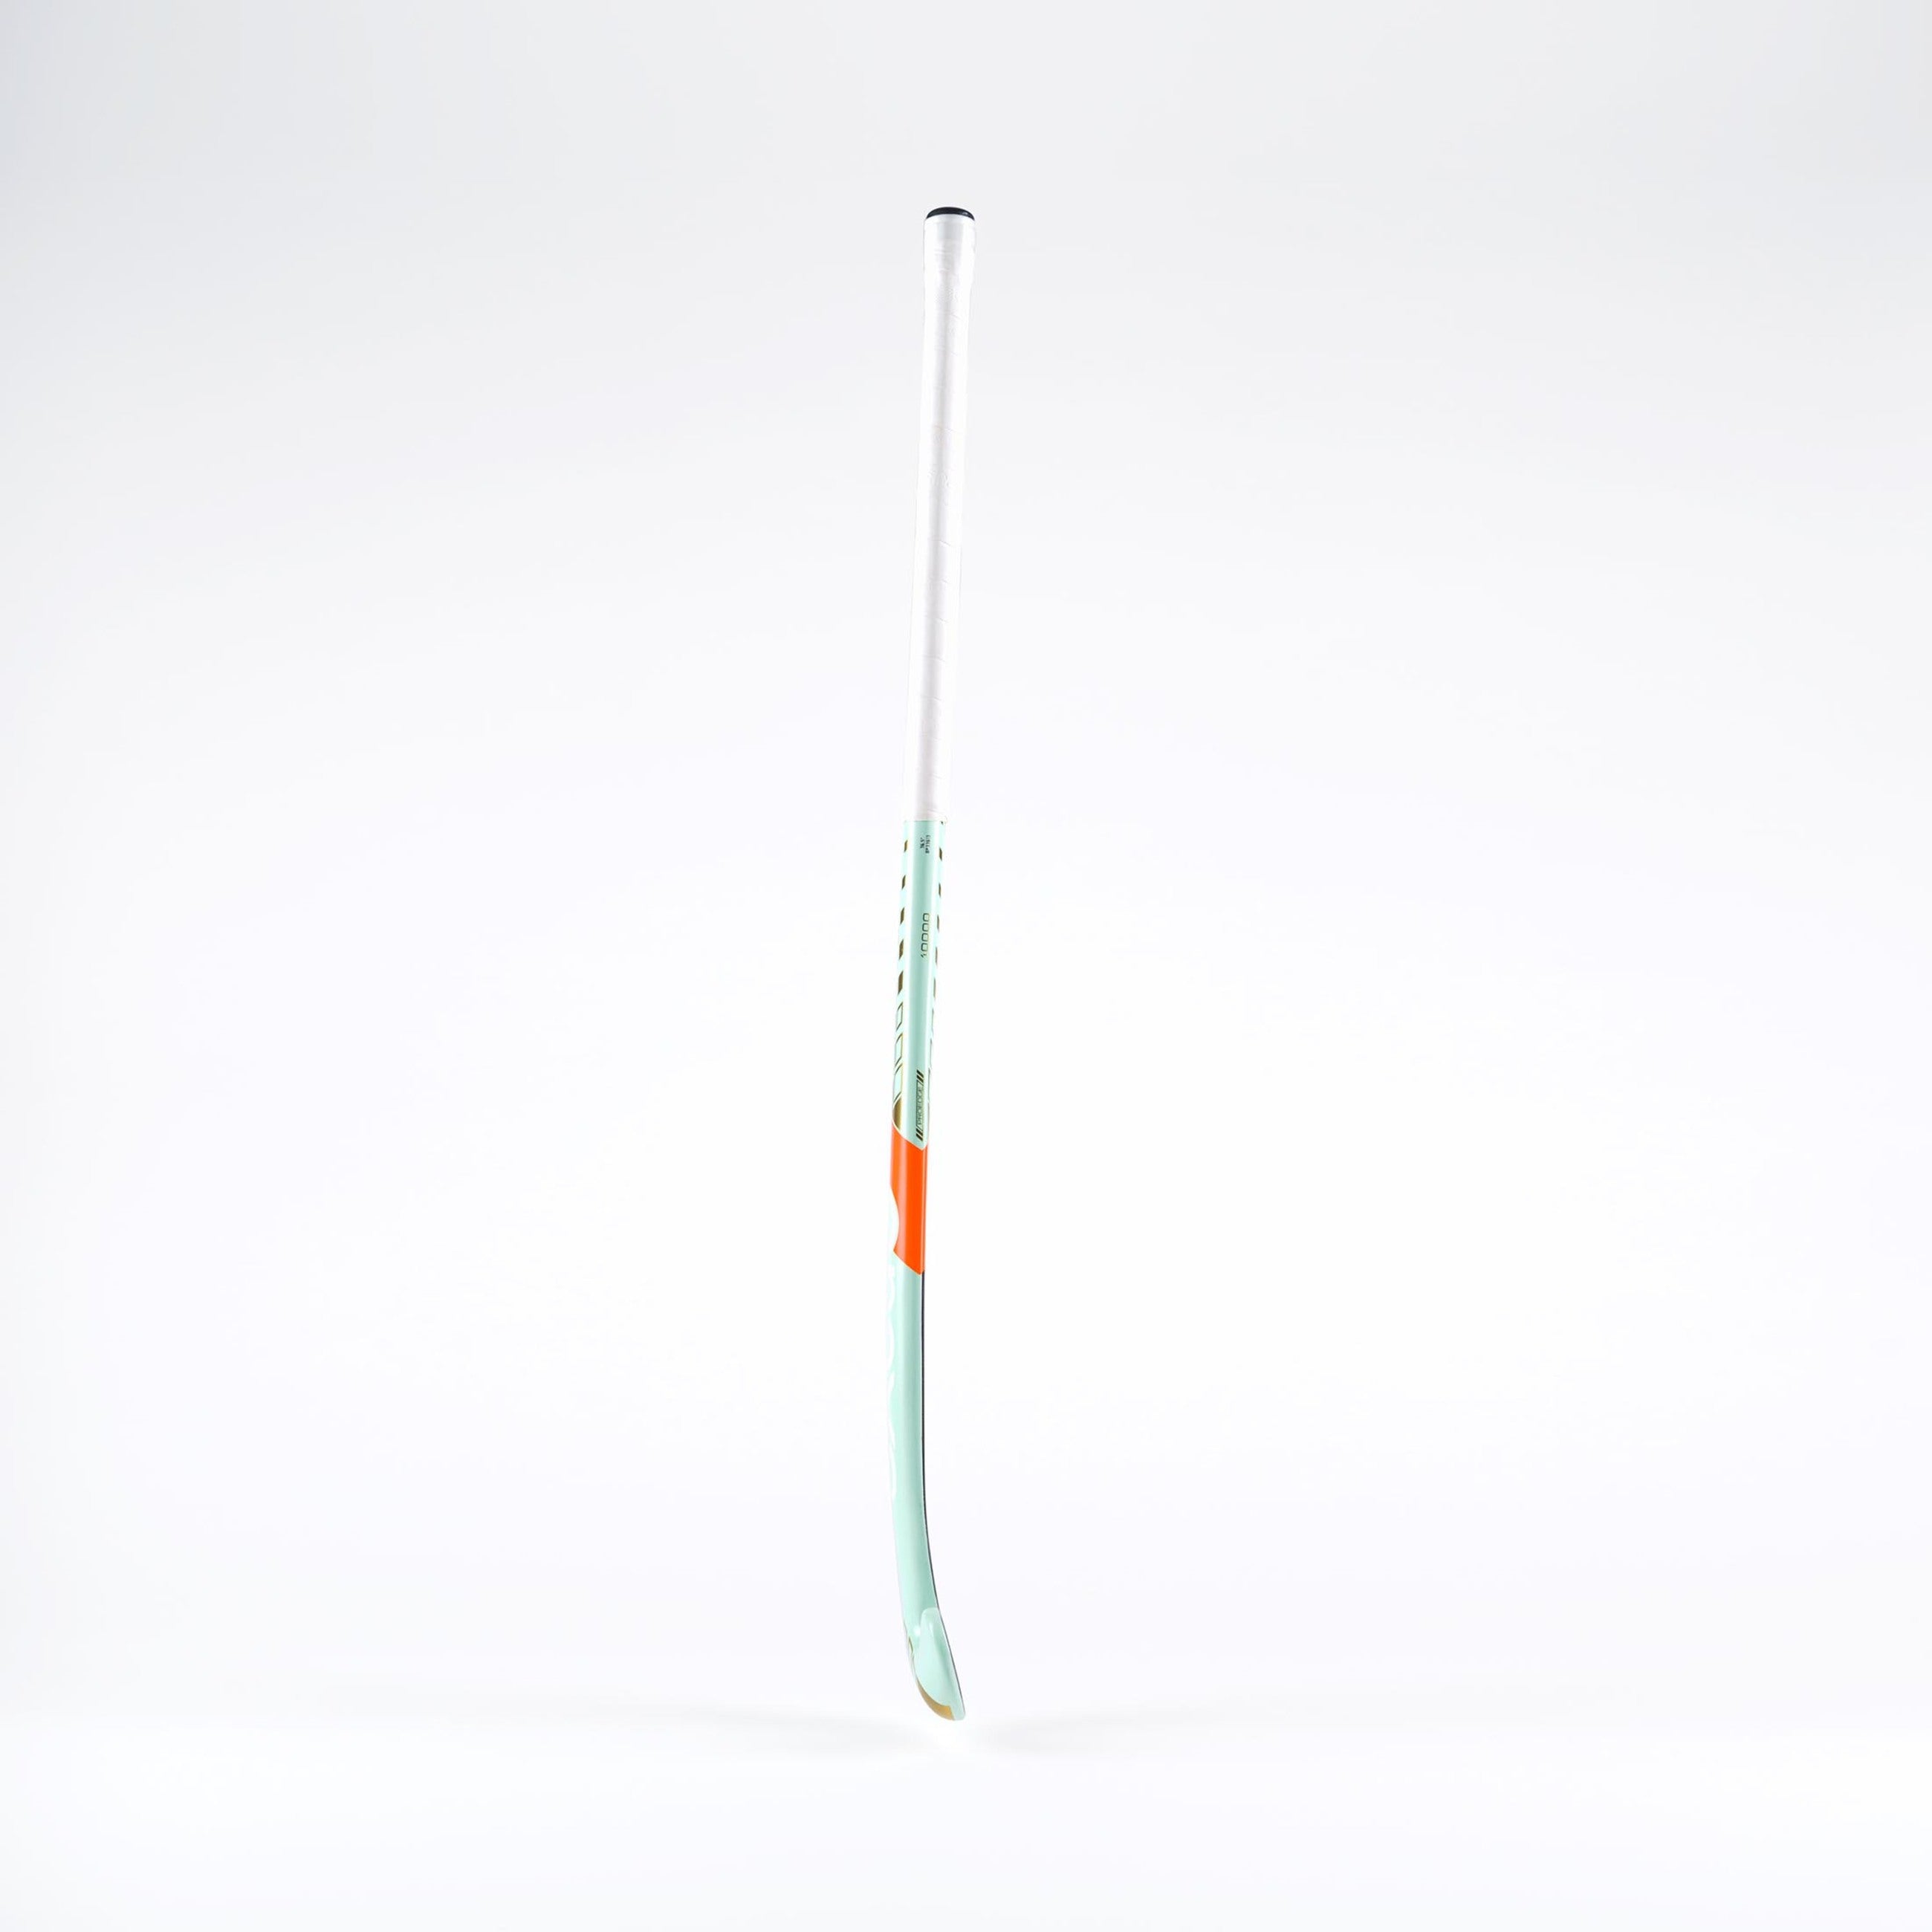 GR10000 Jumbow composite hockeystick